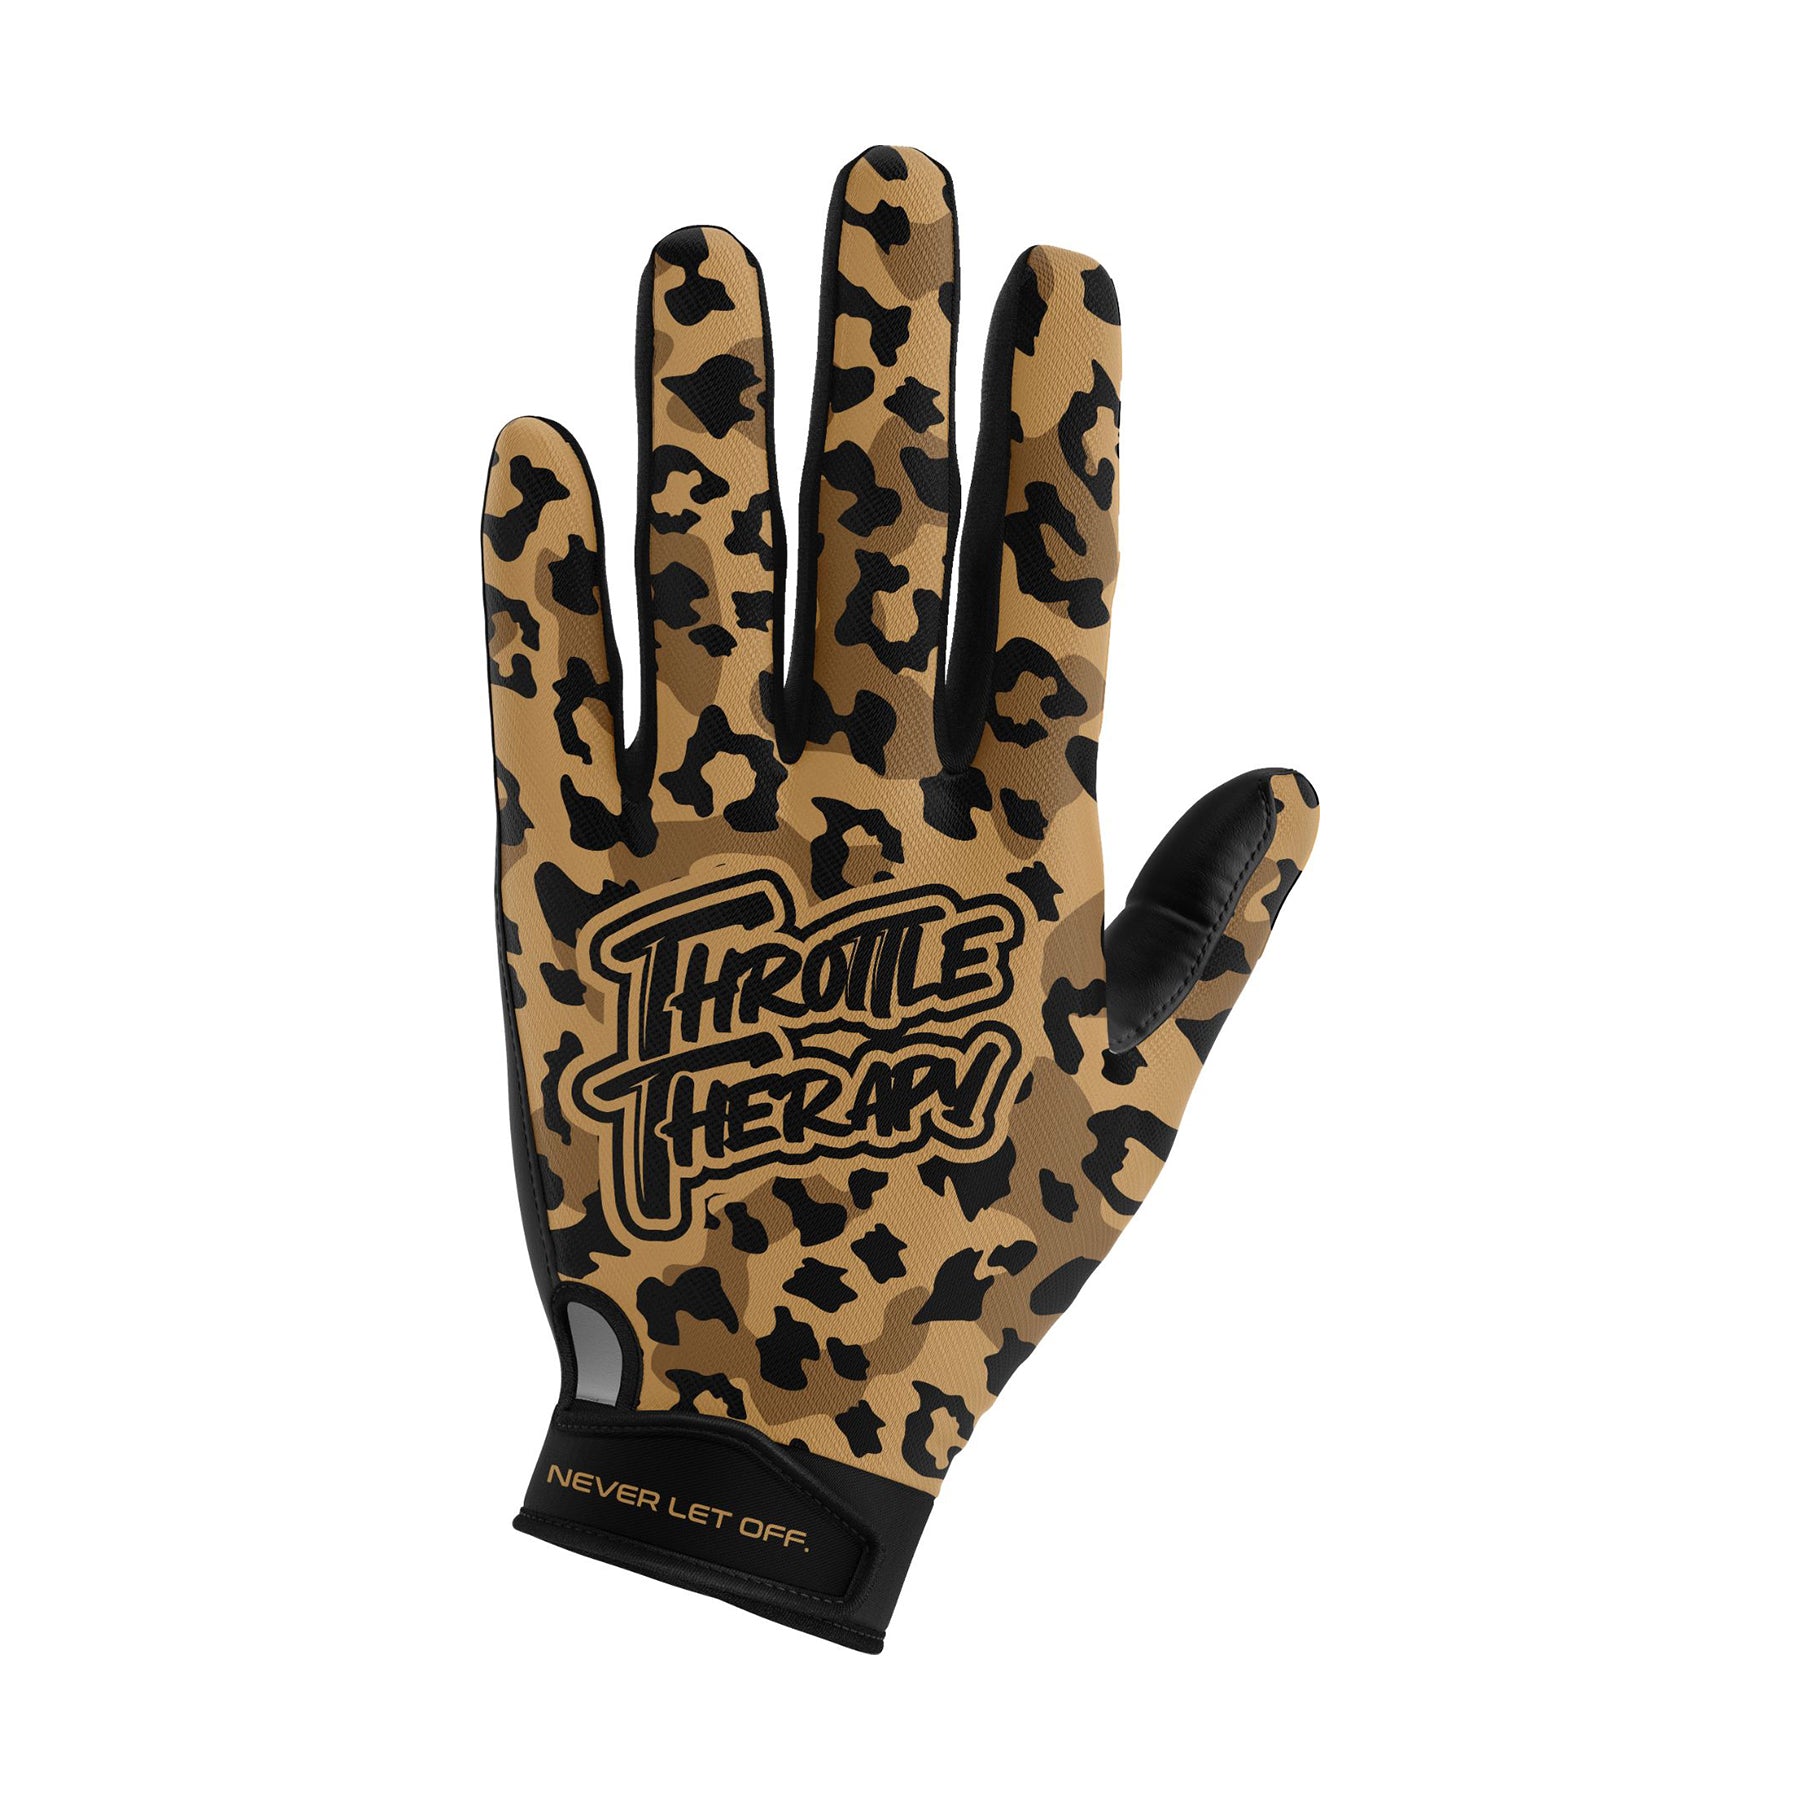 Xlatic-guantes De Motocross Personalizados Para Hombre,Guantes De